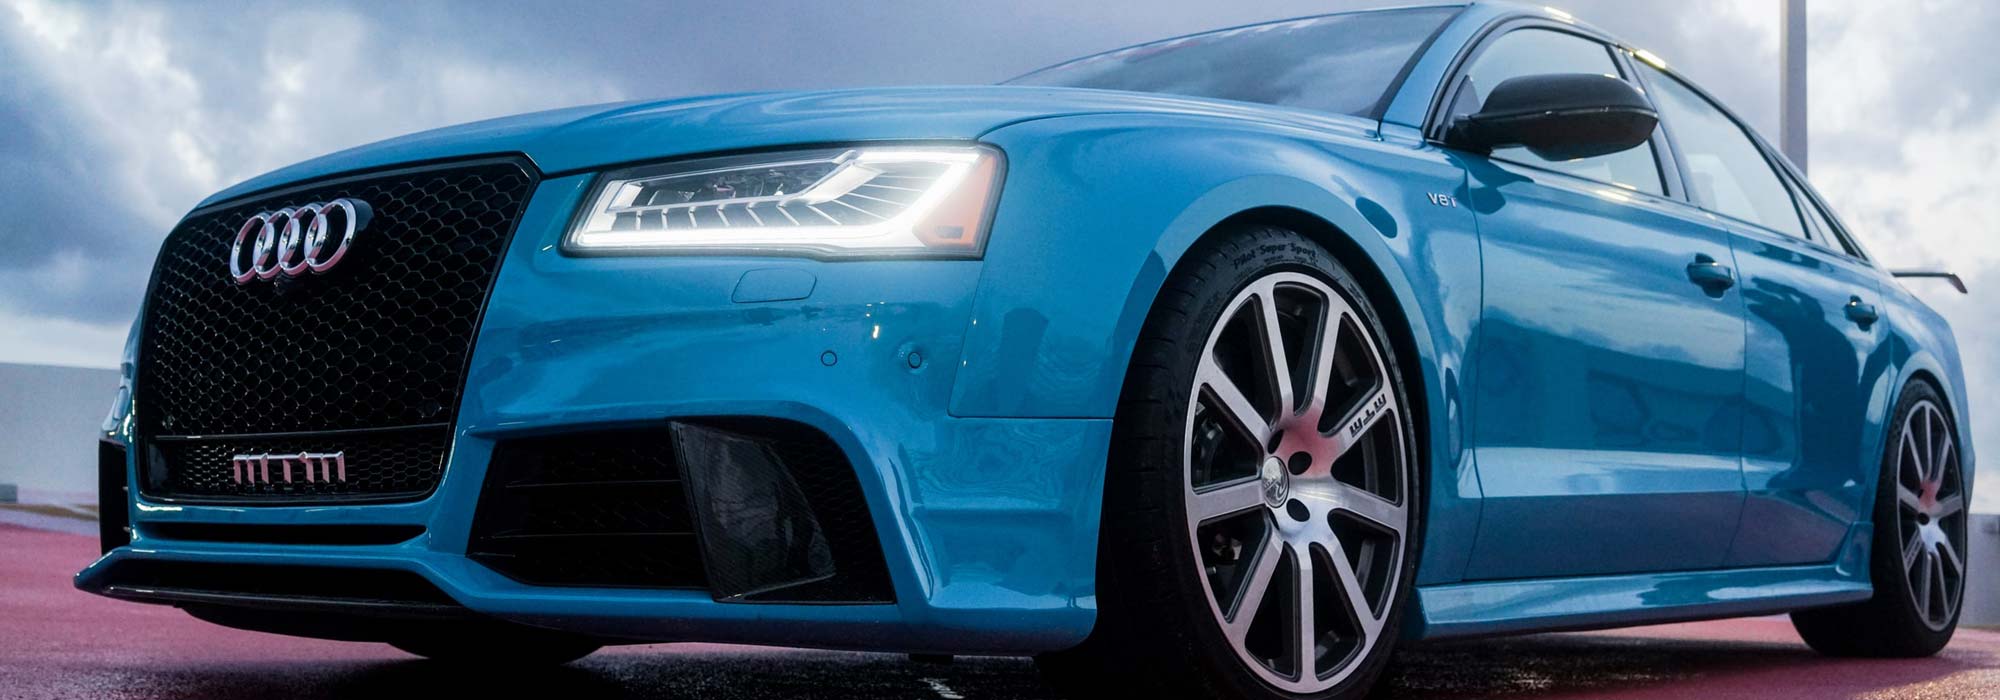 closeup of blue Audi